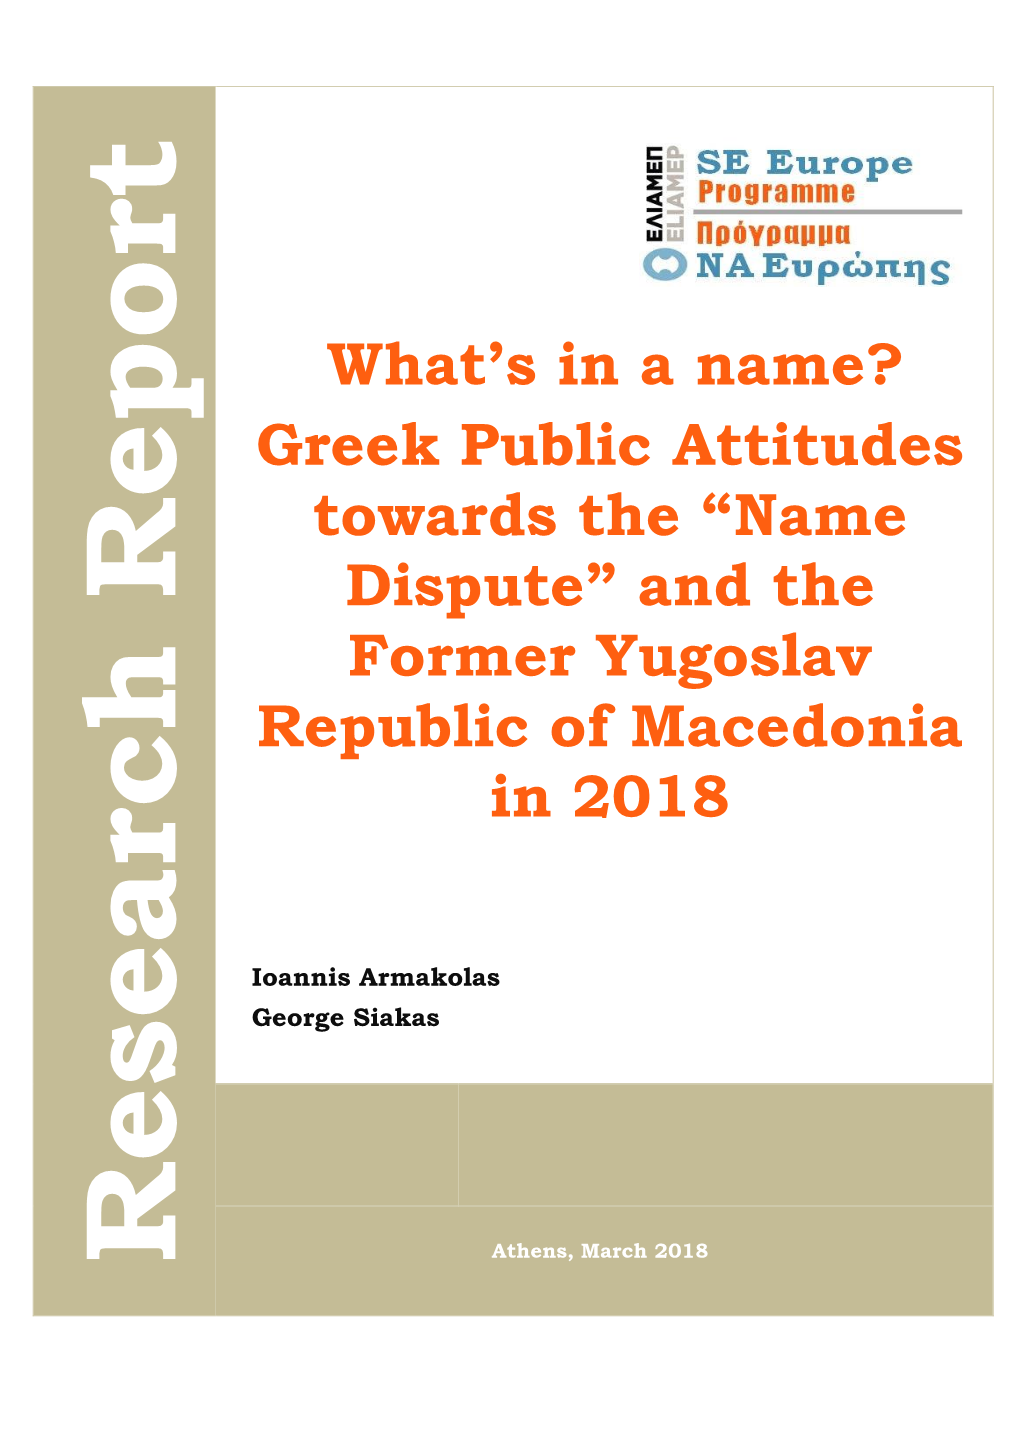 Name Dispute’ and the Former Yugoslav Republic of Macedonia in 2018